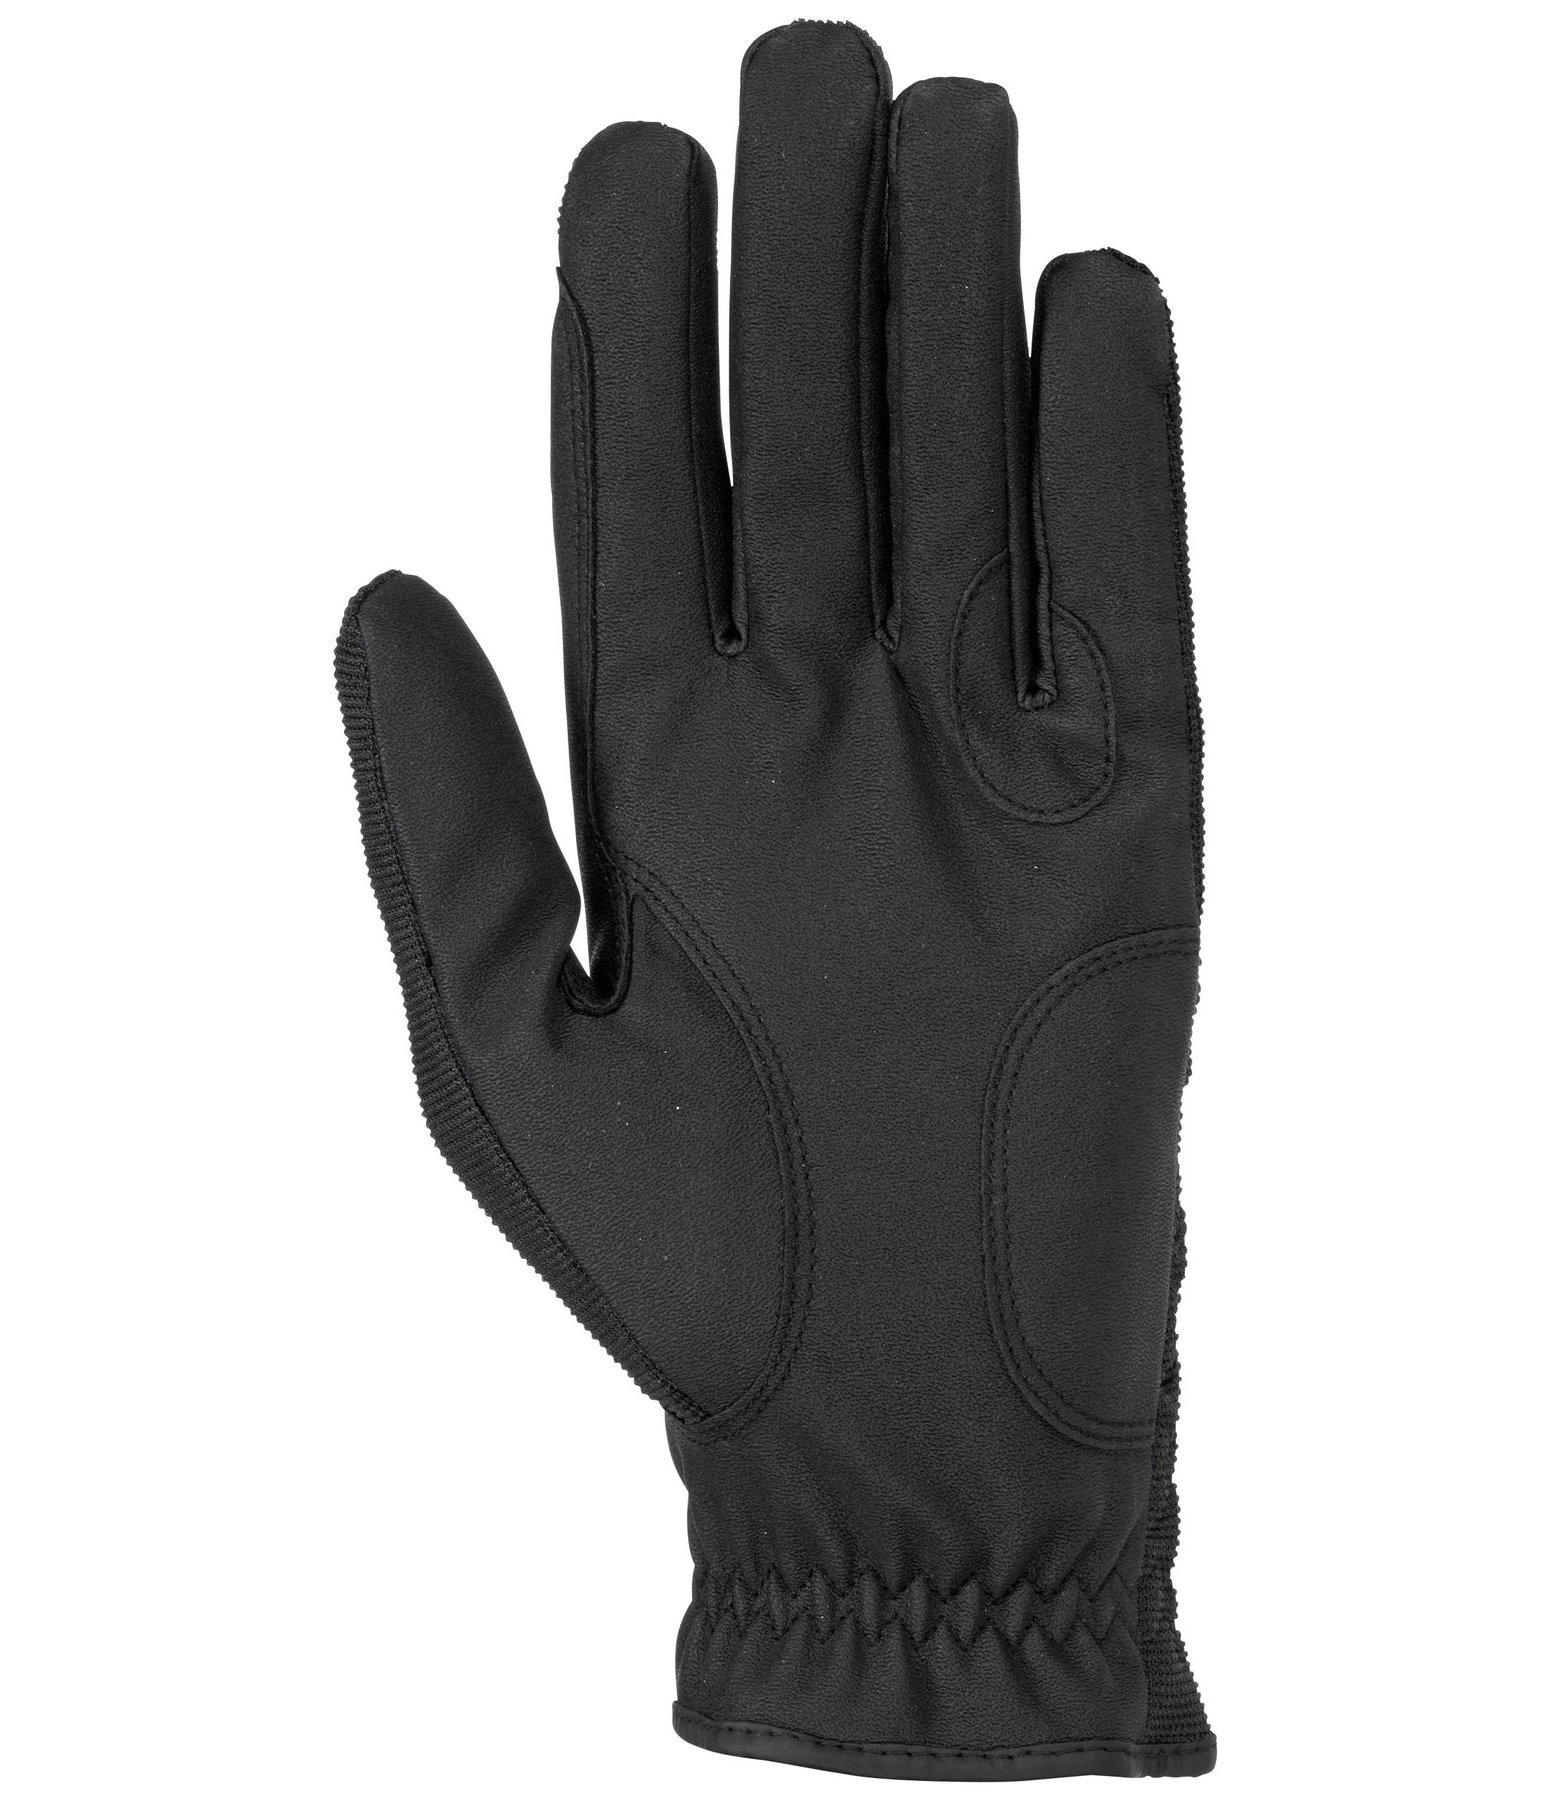 Winter Riding Gloves Newport